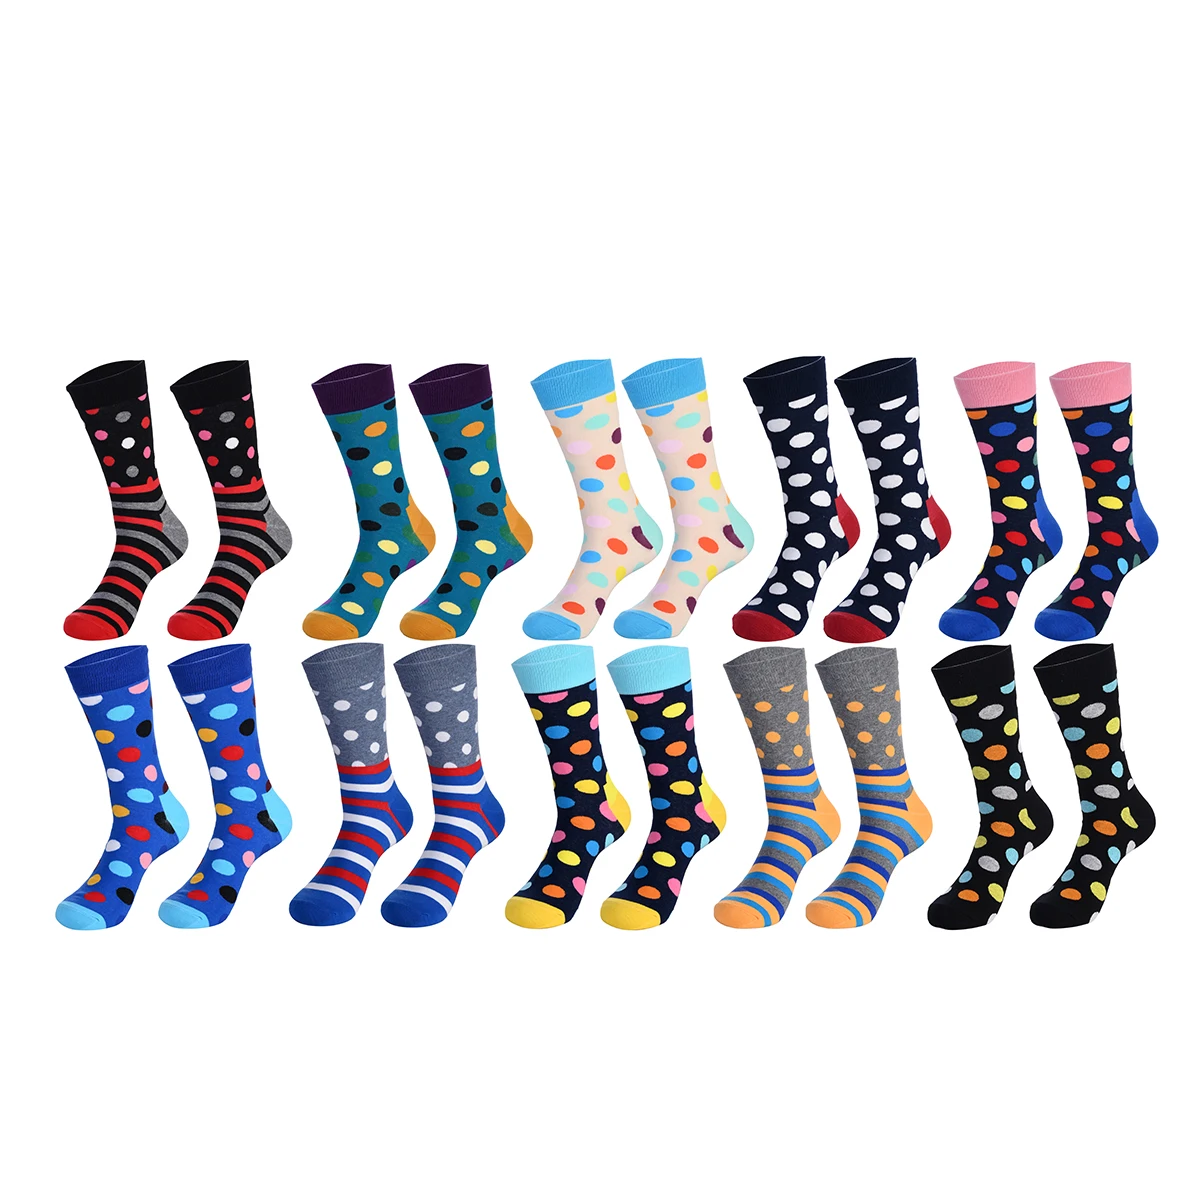 10 pairs Men's socks Hip hop fashion casual socks polka dot socks Women's socks Men's socks high socks winter thermal socks